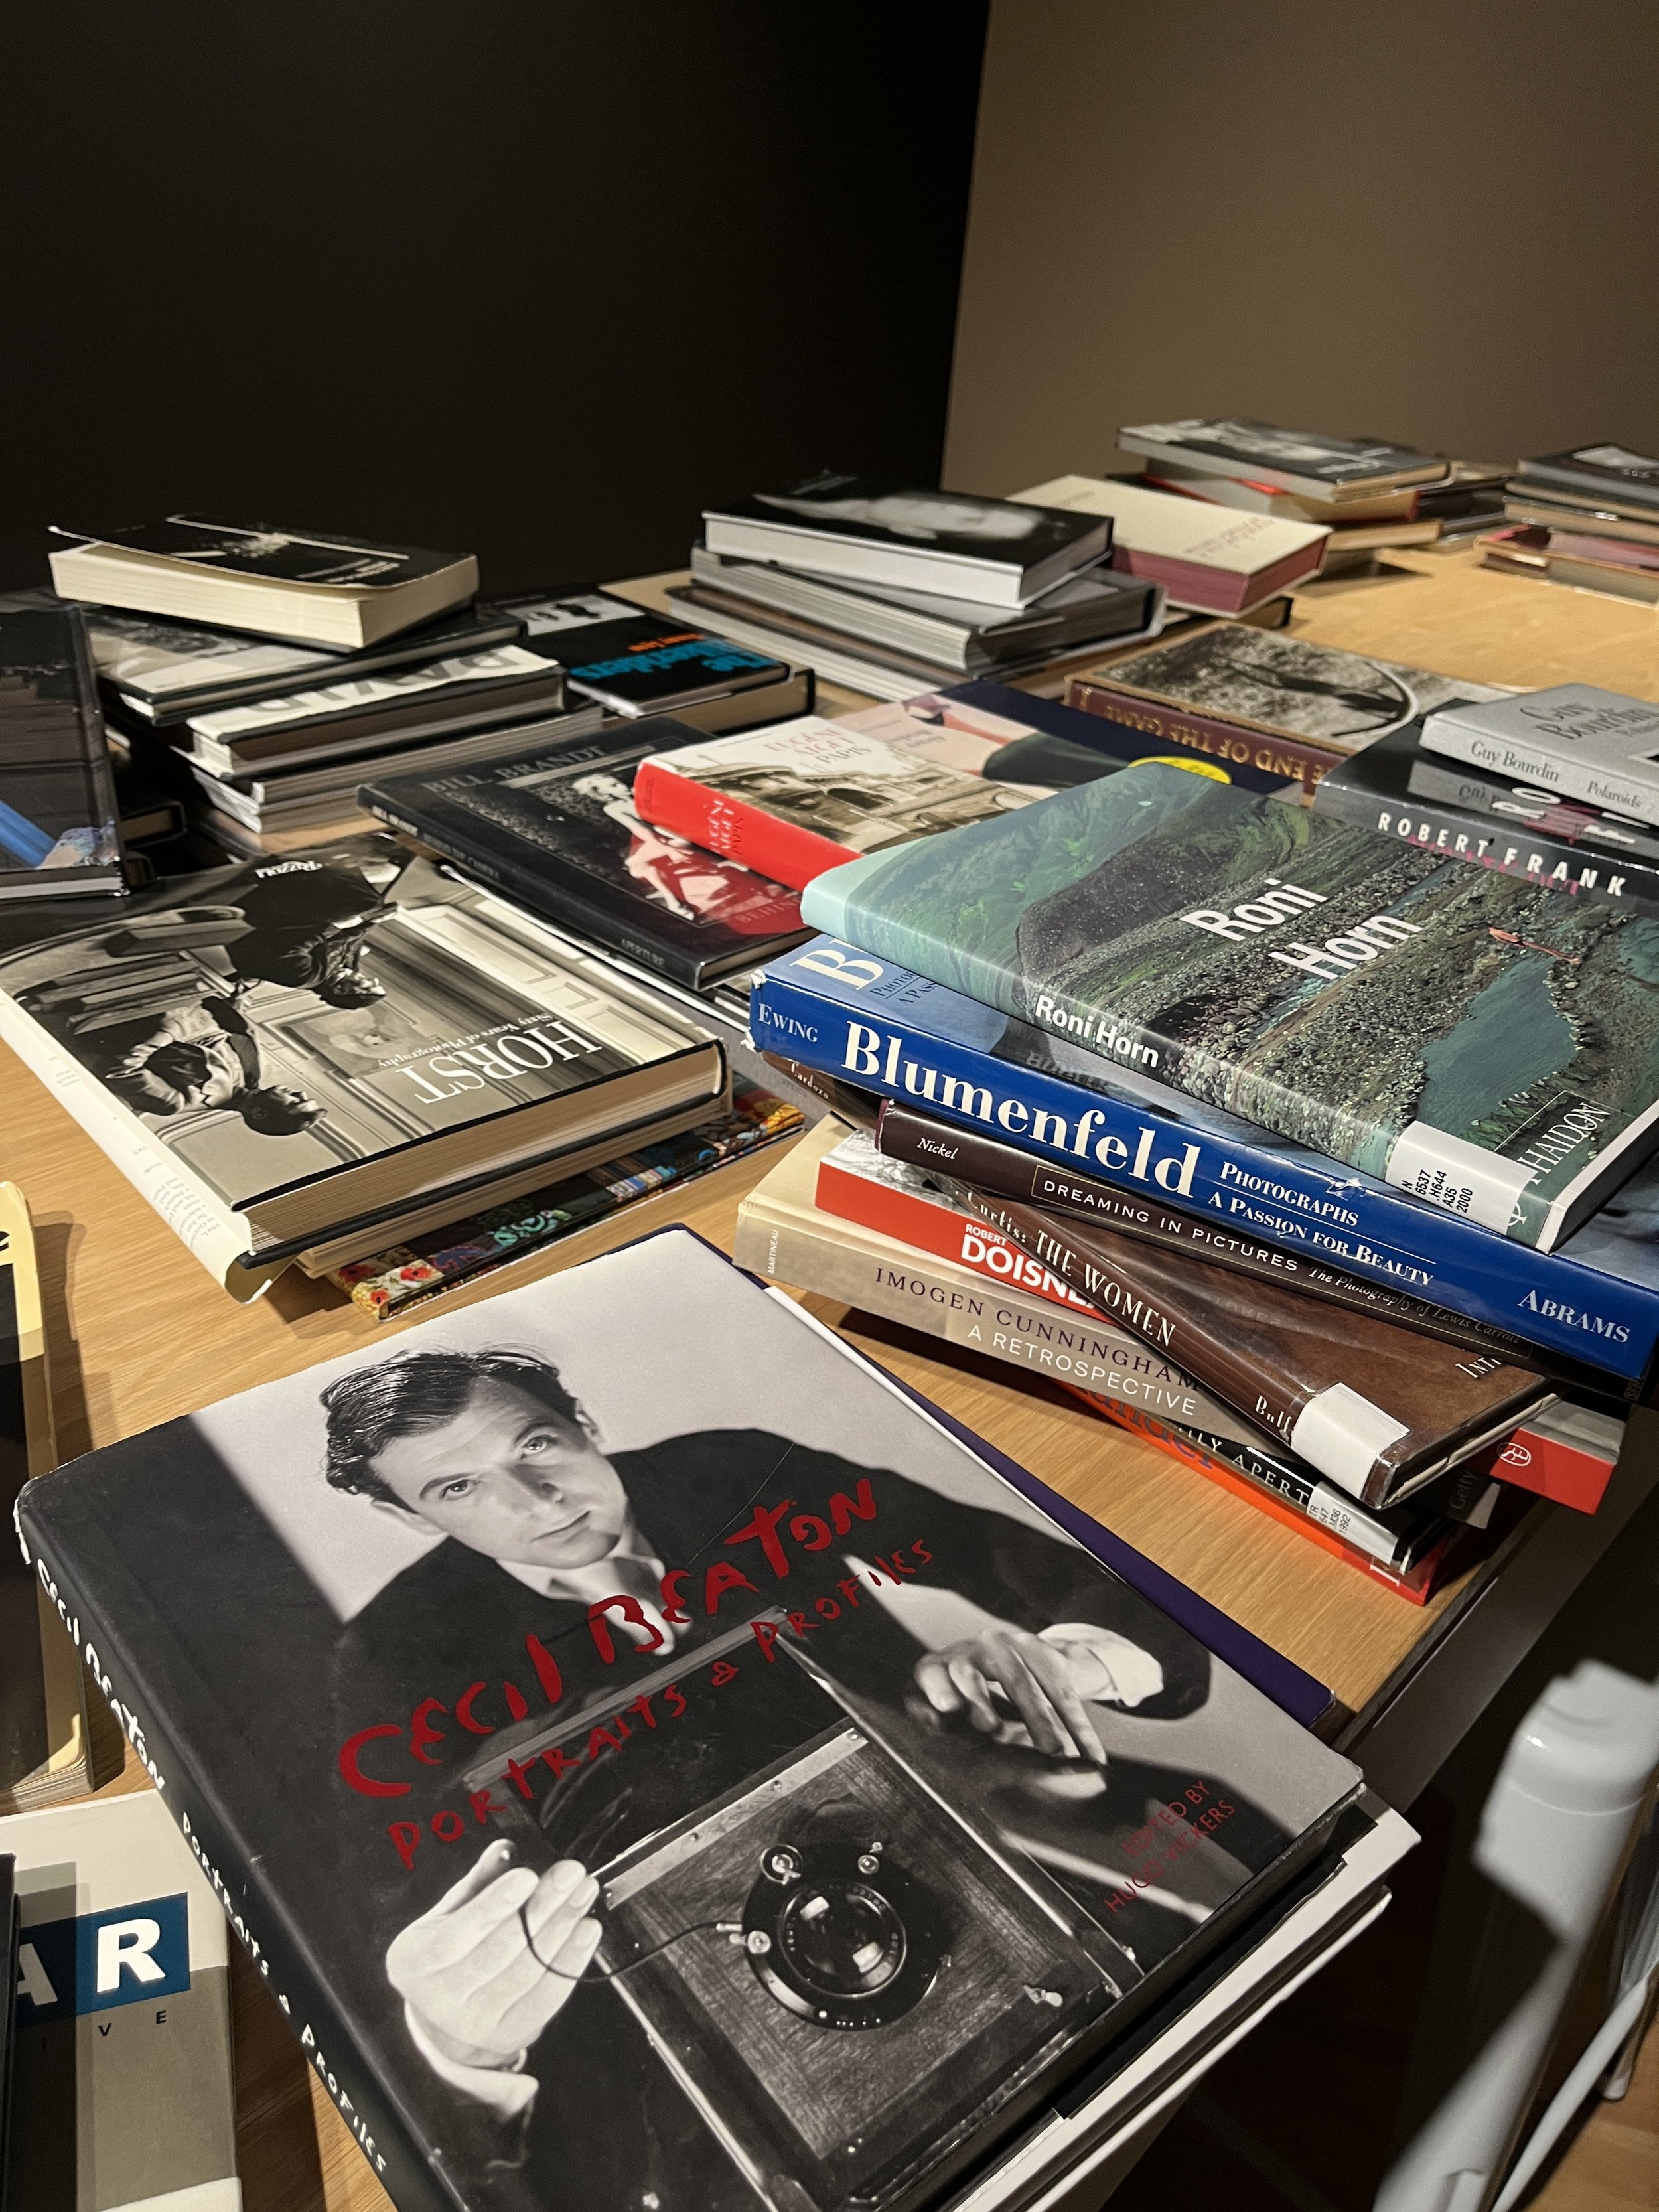 Leibovitz inspirational book collection